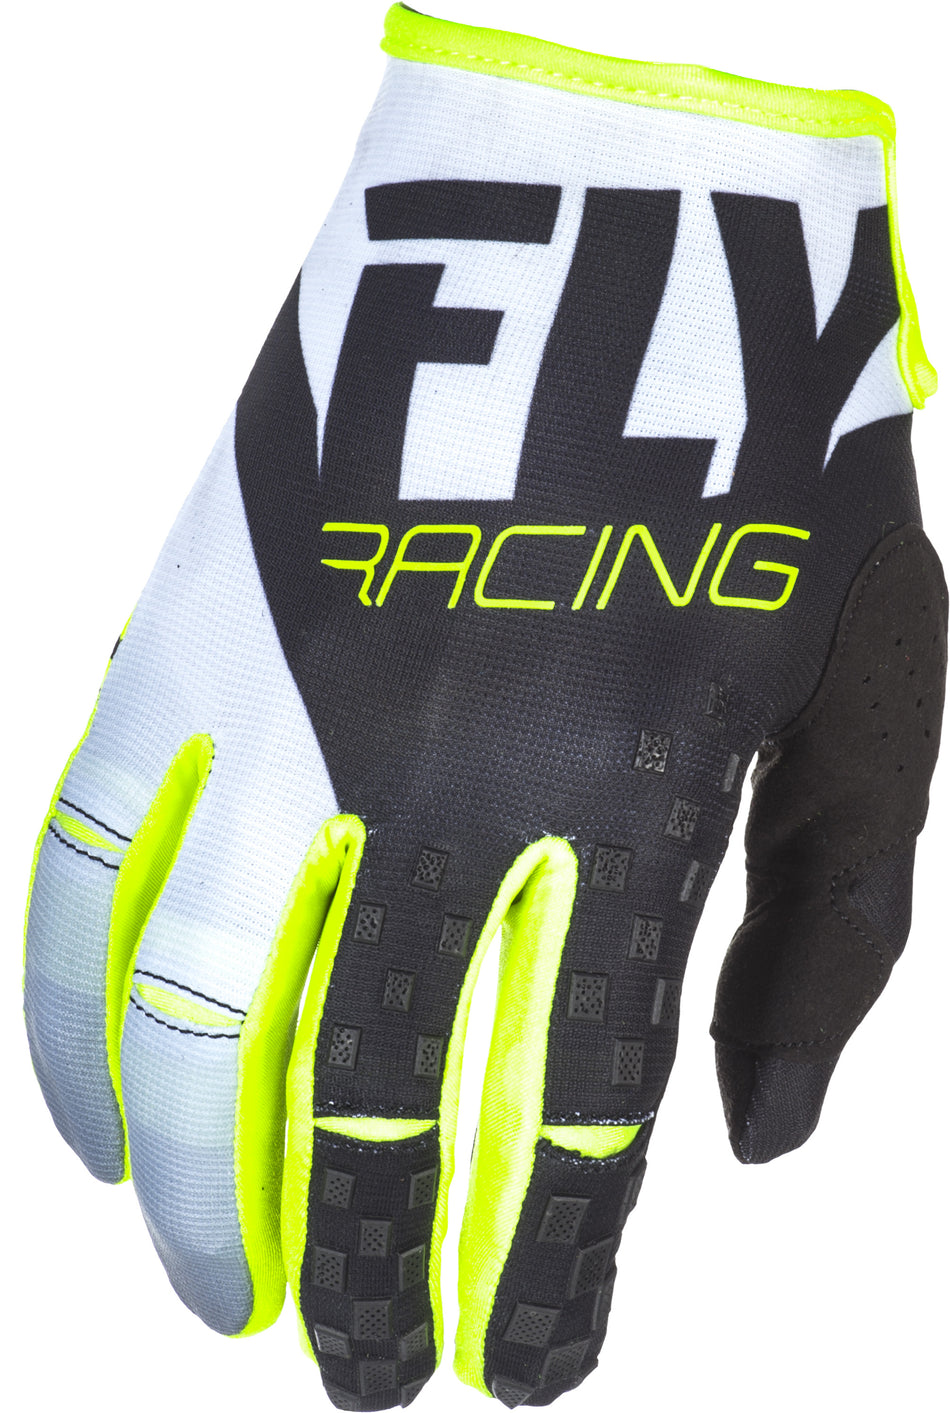 FLY RACING Kinetic Gloves Black/White/Hi-Vis Sz 10 371-41610